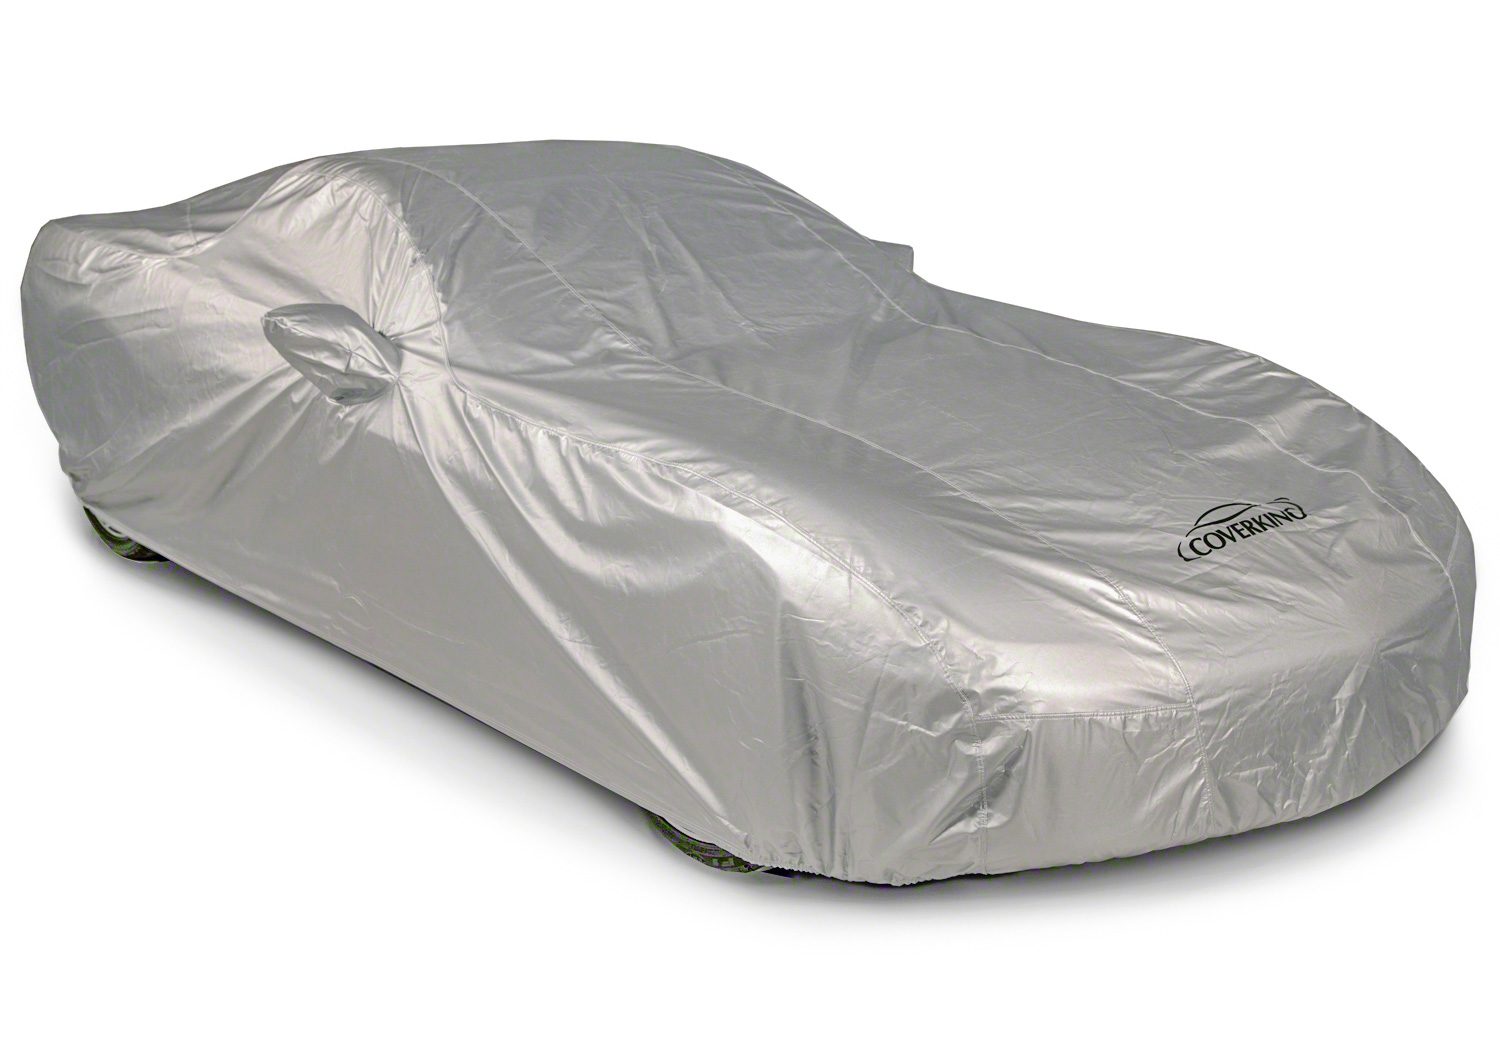 Silverguard Plus Car Cover for 2022 Hyundai Ioniq 5 